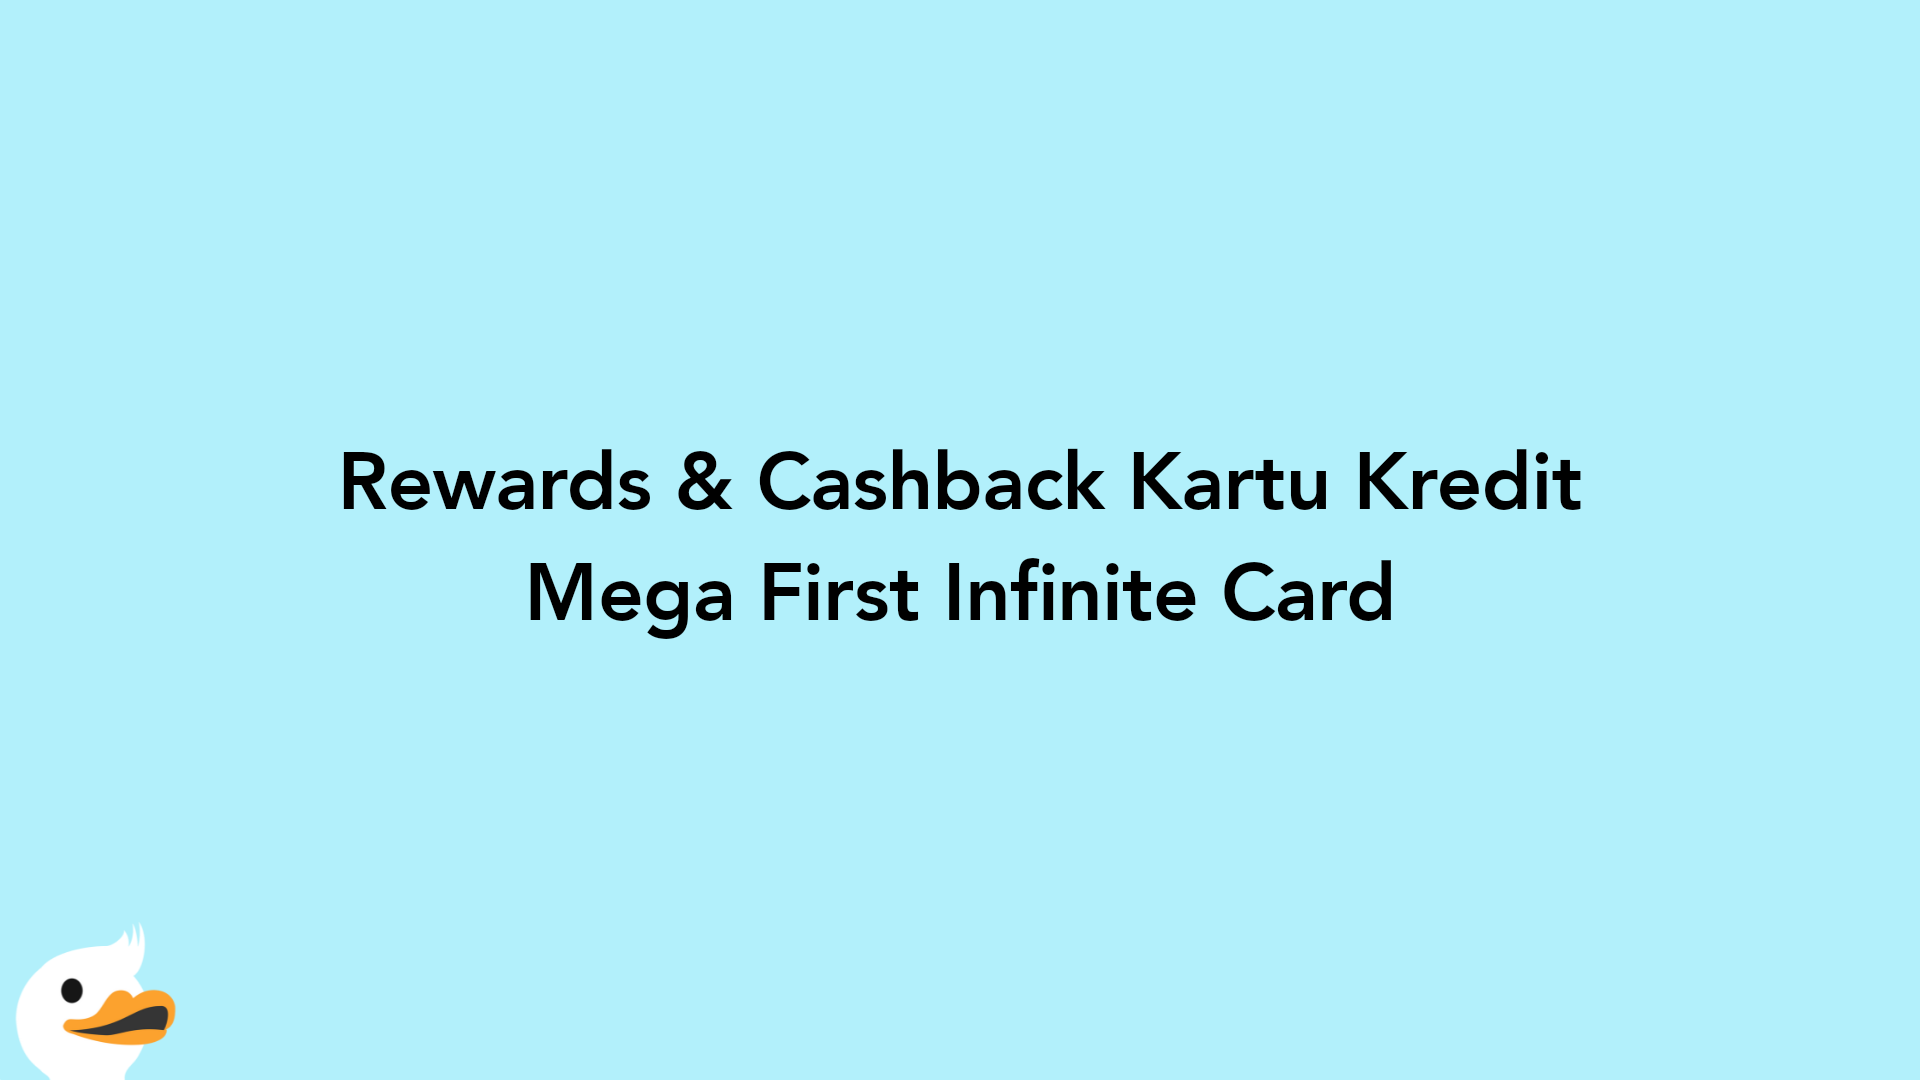 Rewards & Cashback Kartu Kredit Mega First Infinite Card